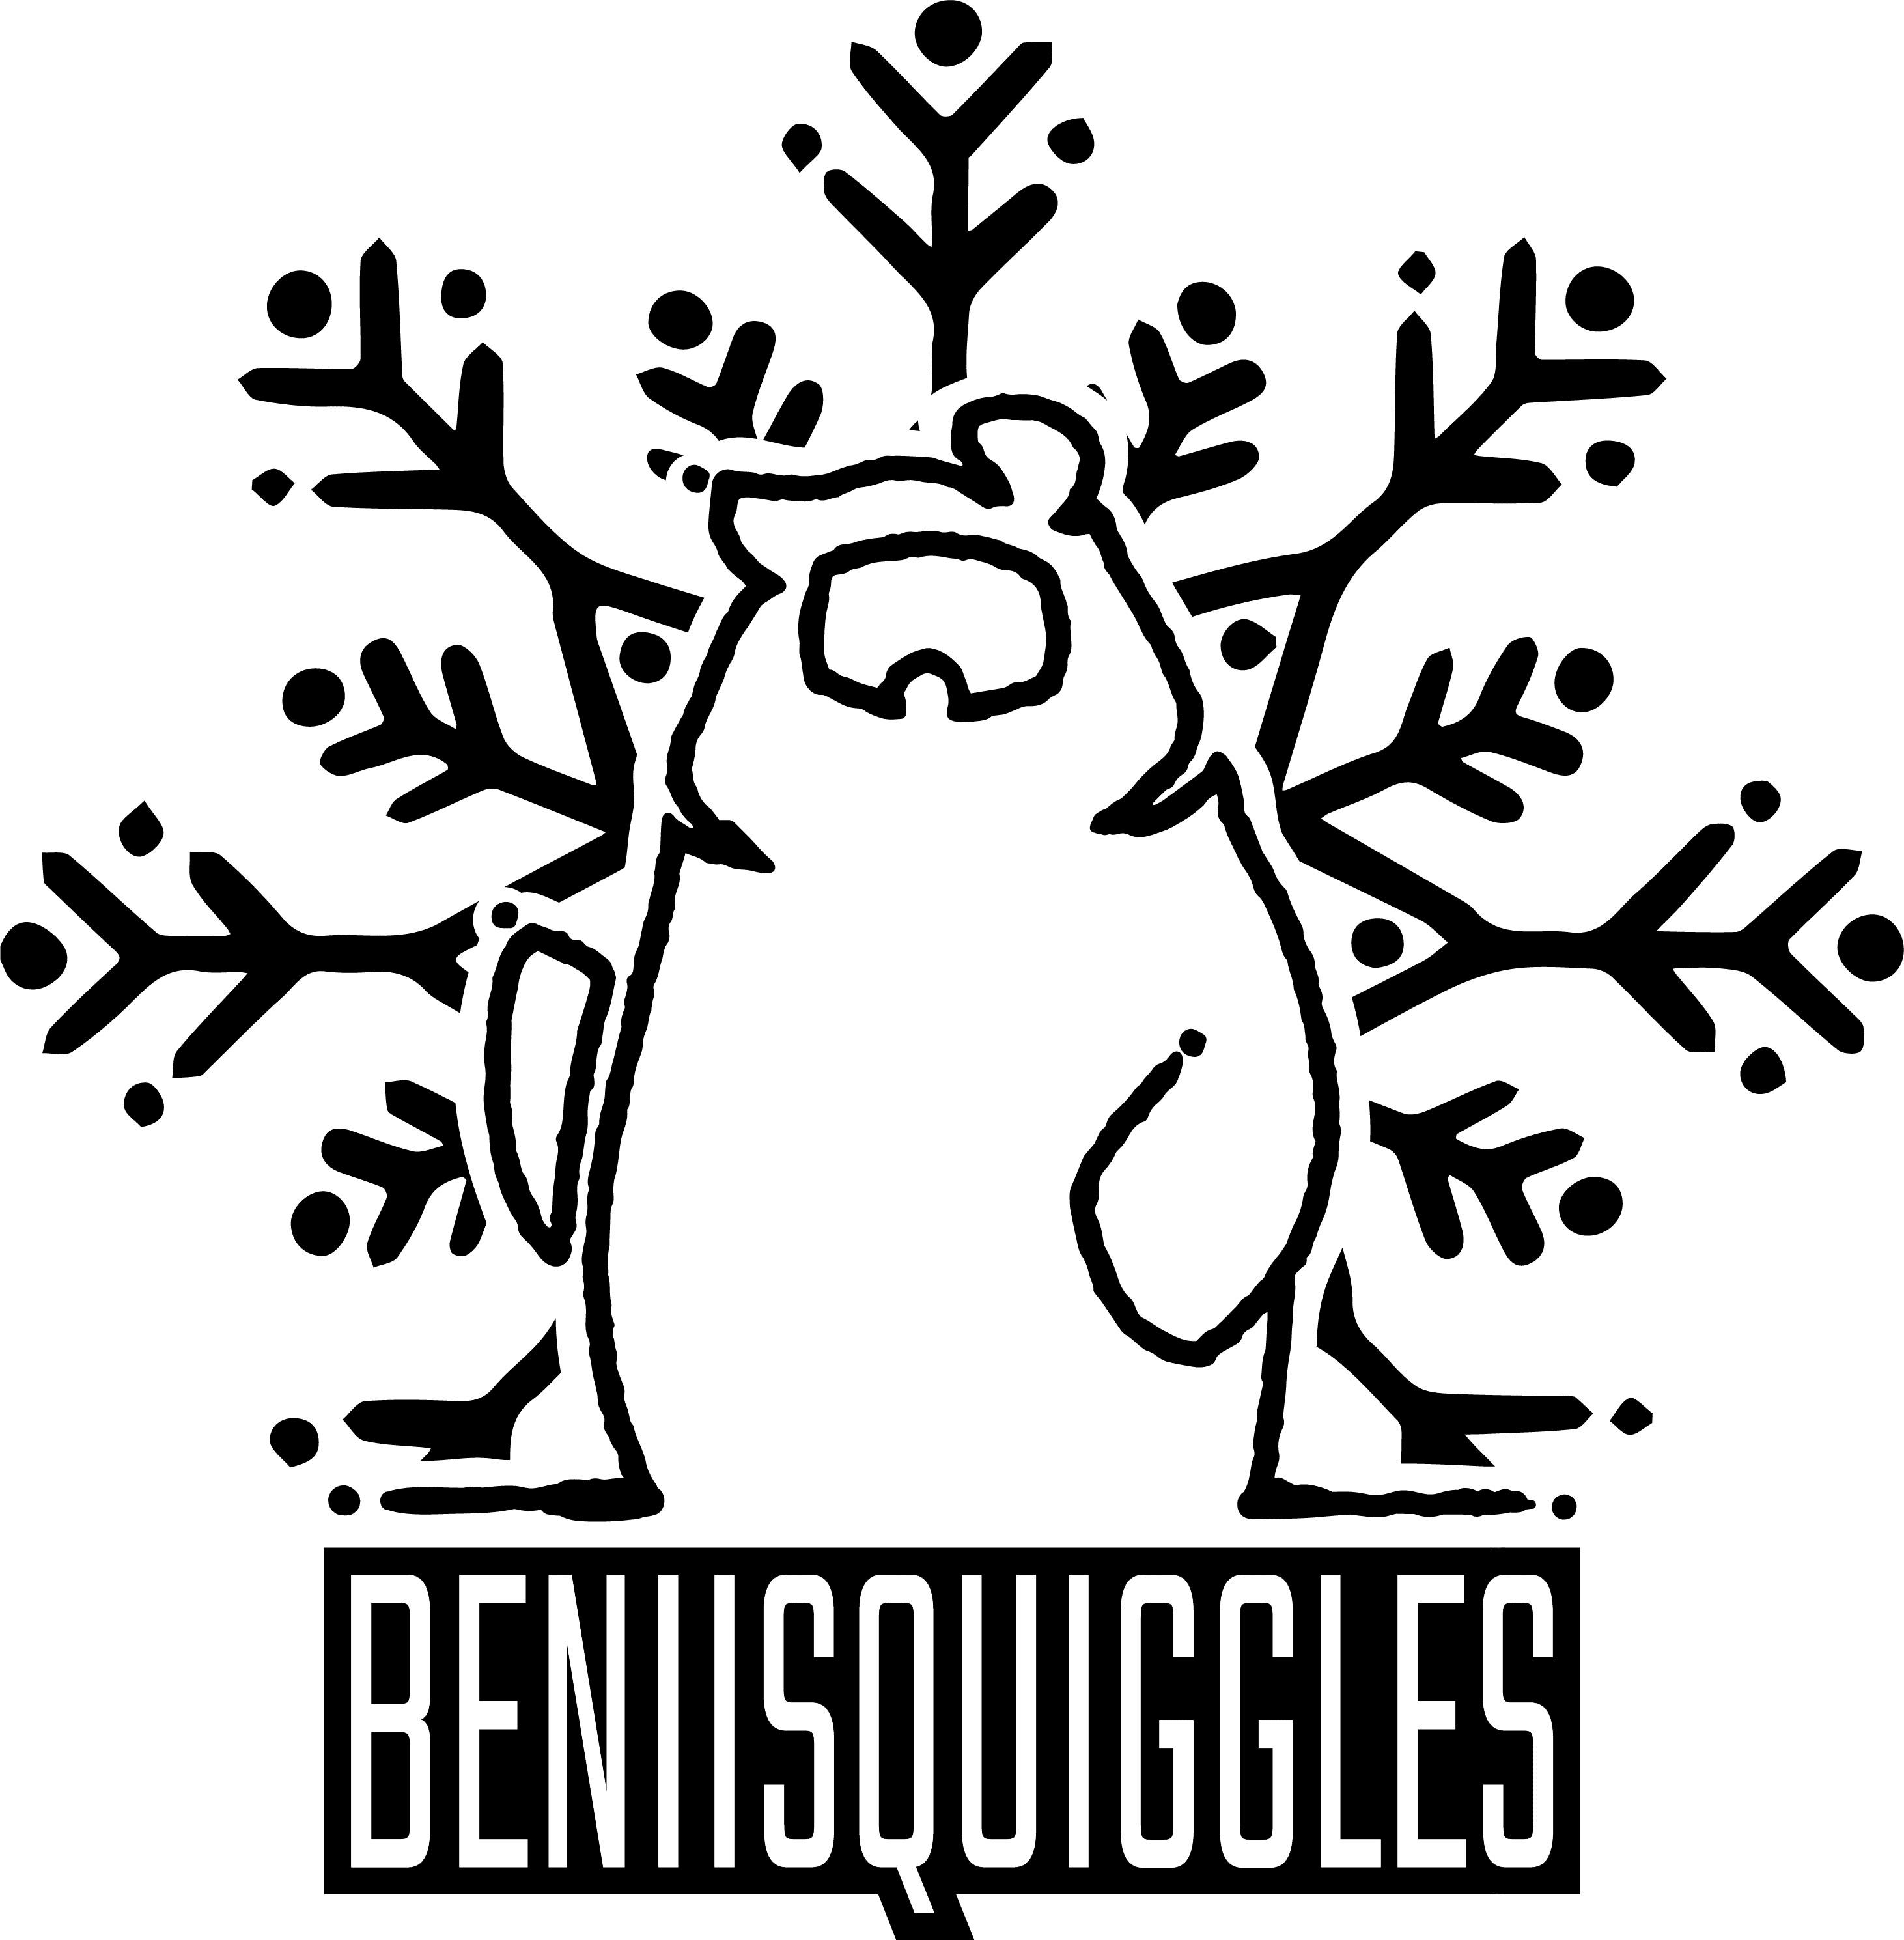 Beniisquiggles